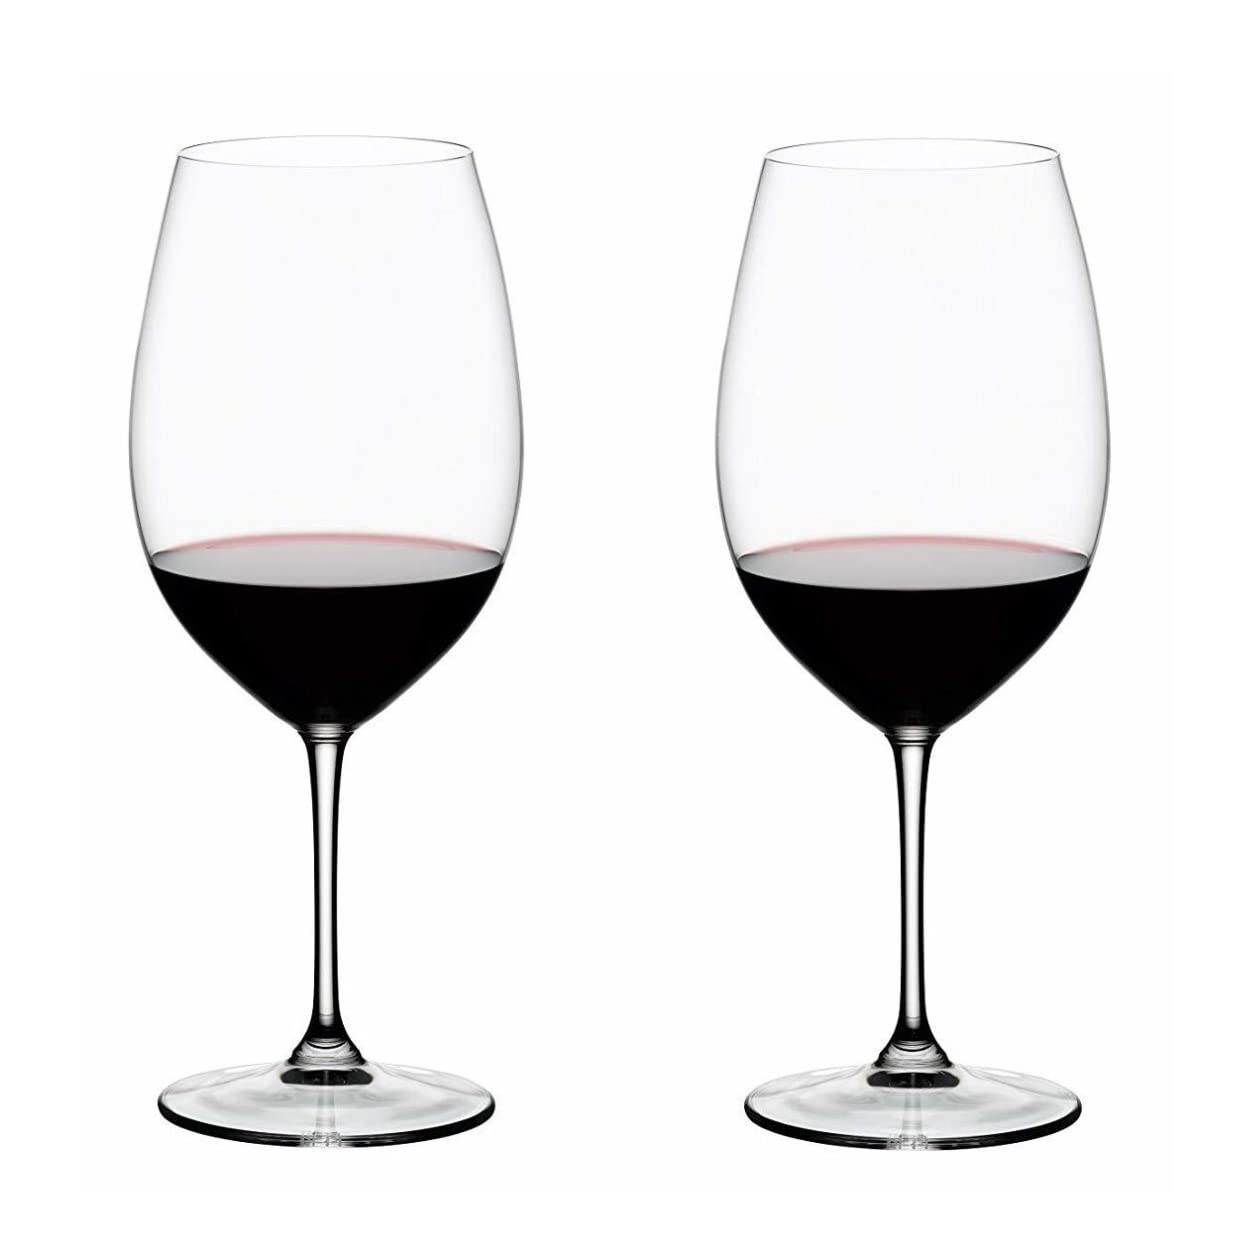 Riedel Vinum Bordeaux Grand Cru Glasses (4-Pack) with Polishing Cloth Bundle (3 Items)